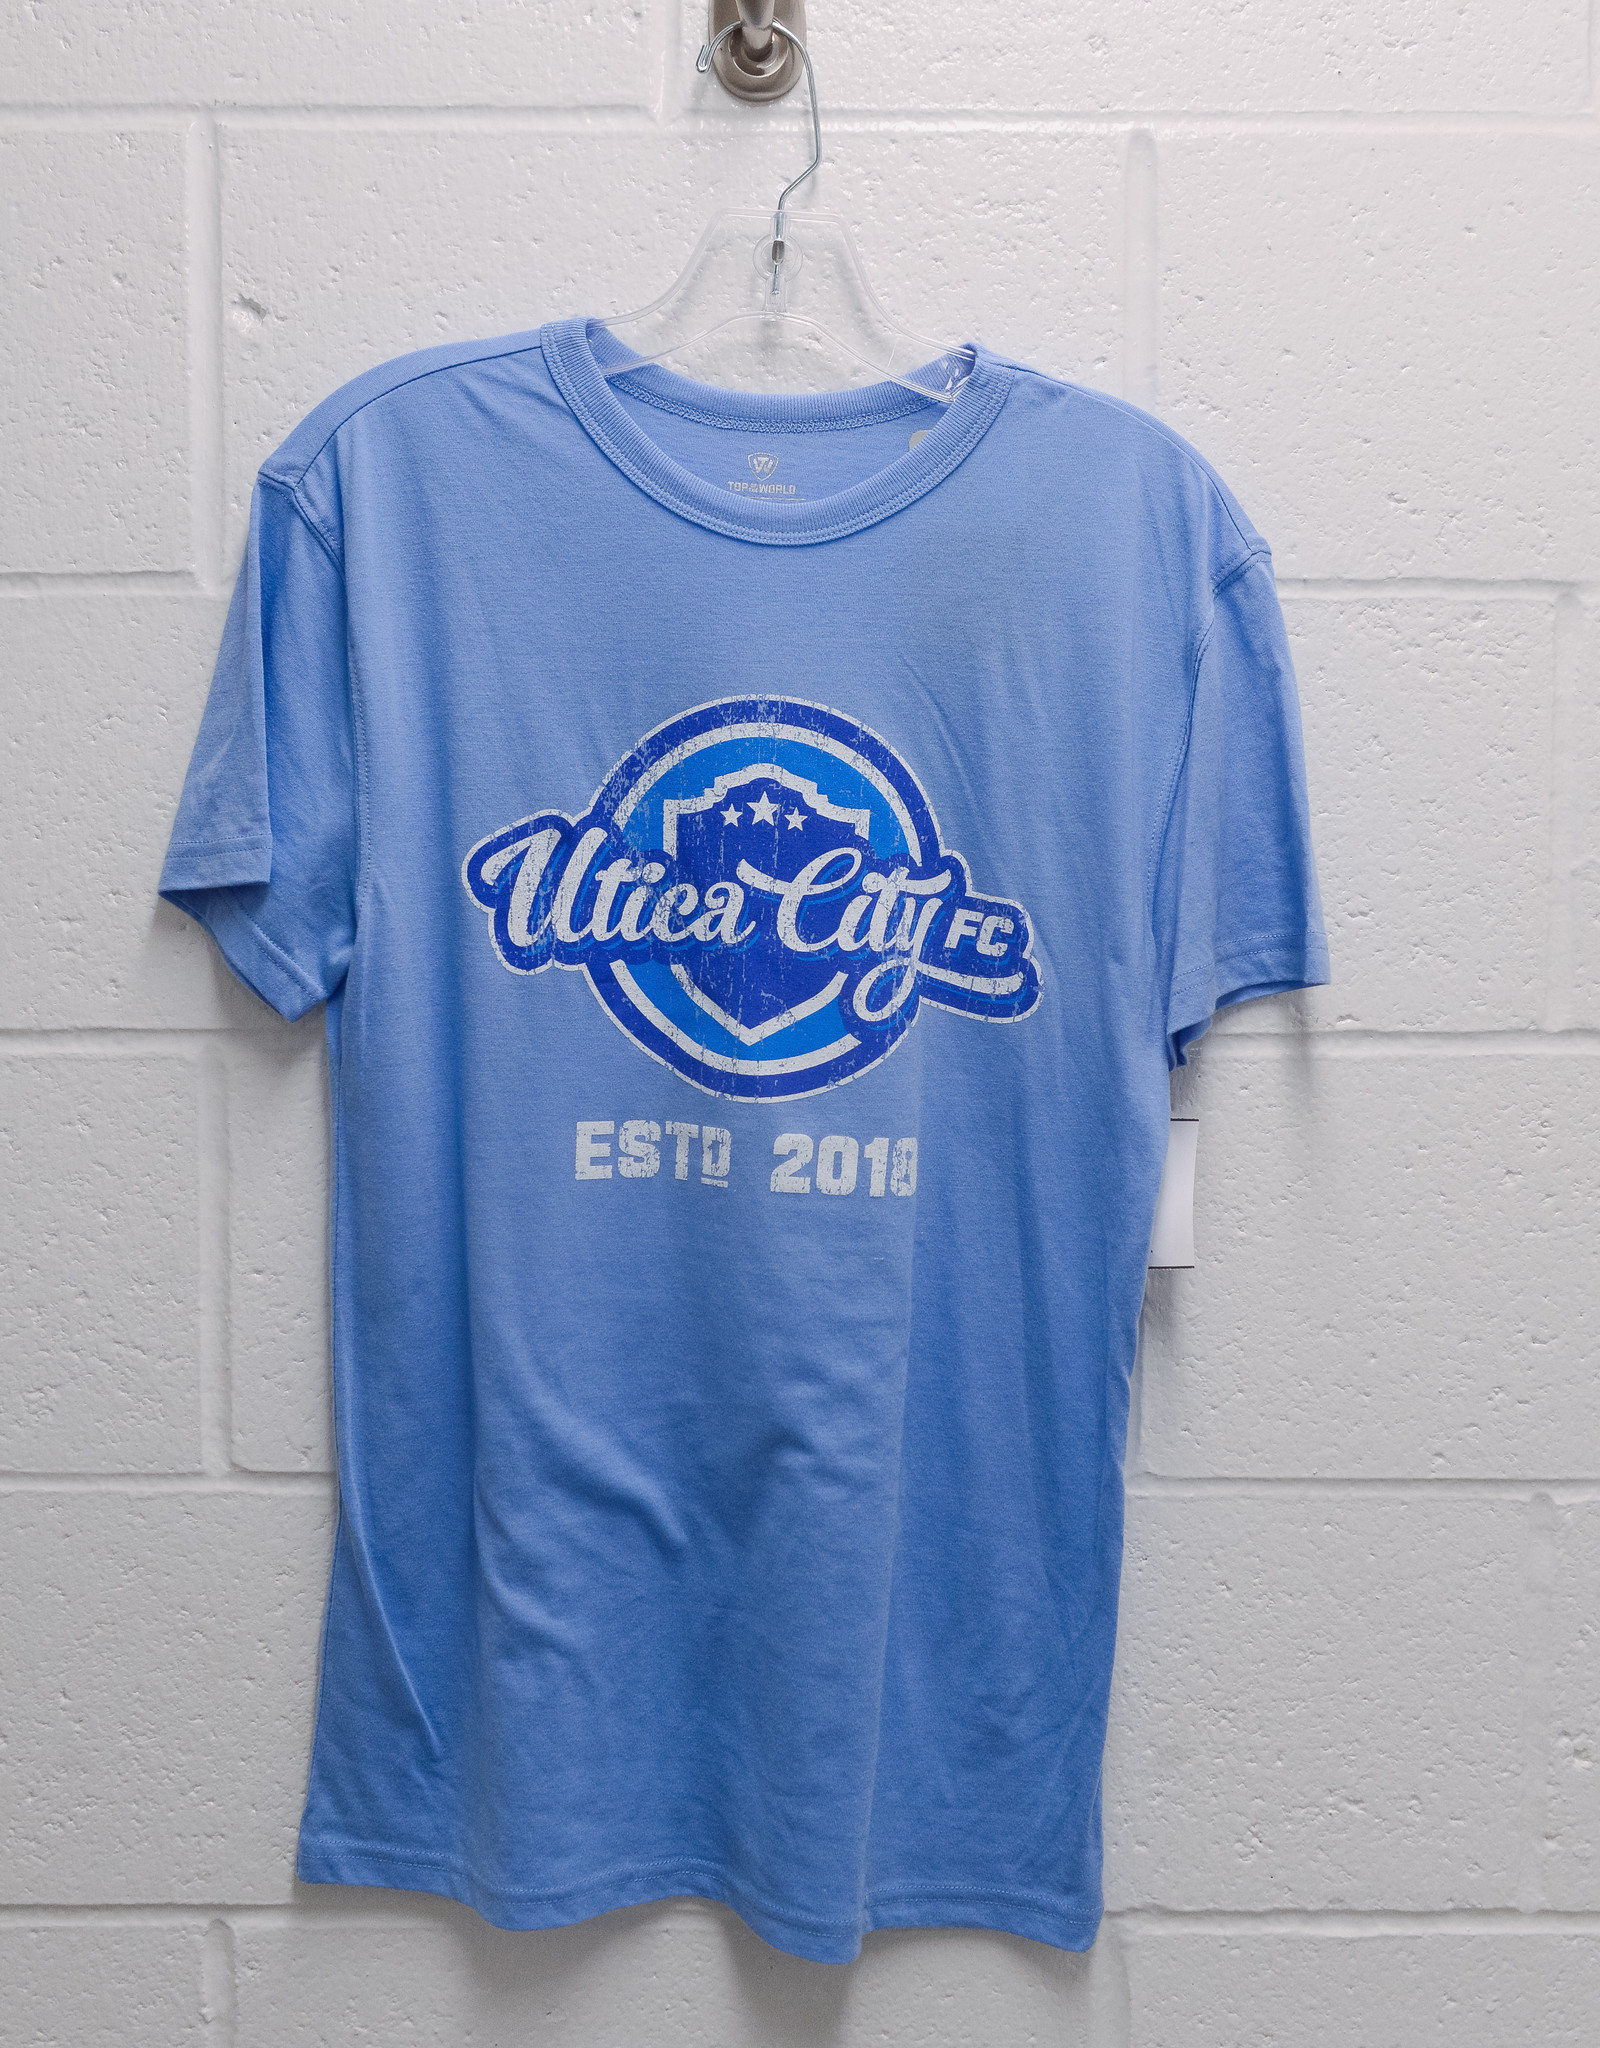 Top of the World Light Blue Tri-Blend T-Shirt w/ Retro UCFC Logo ...